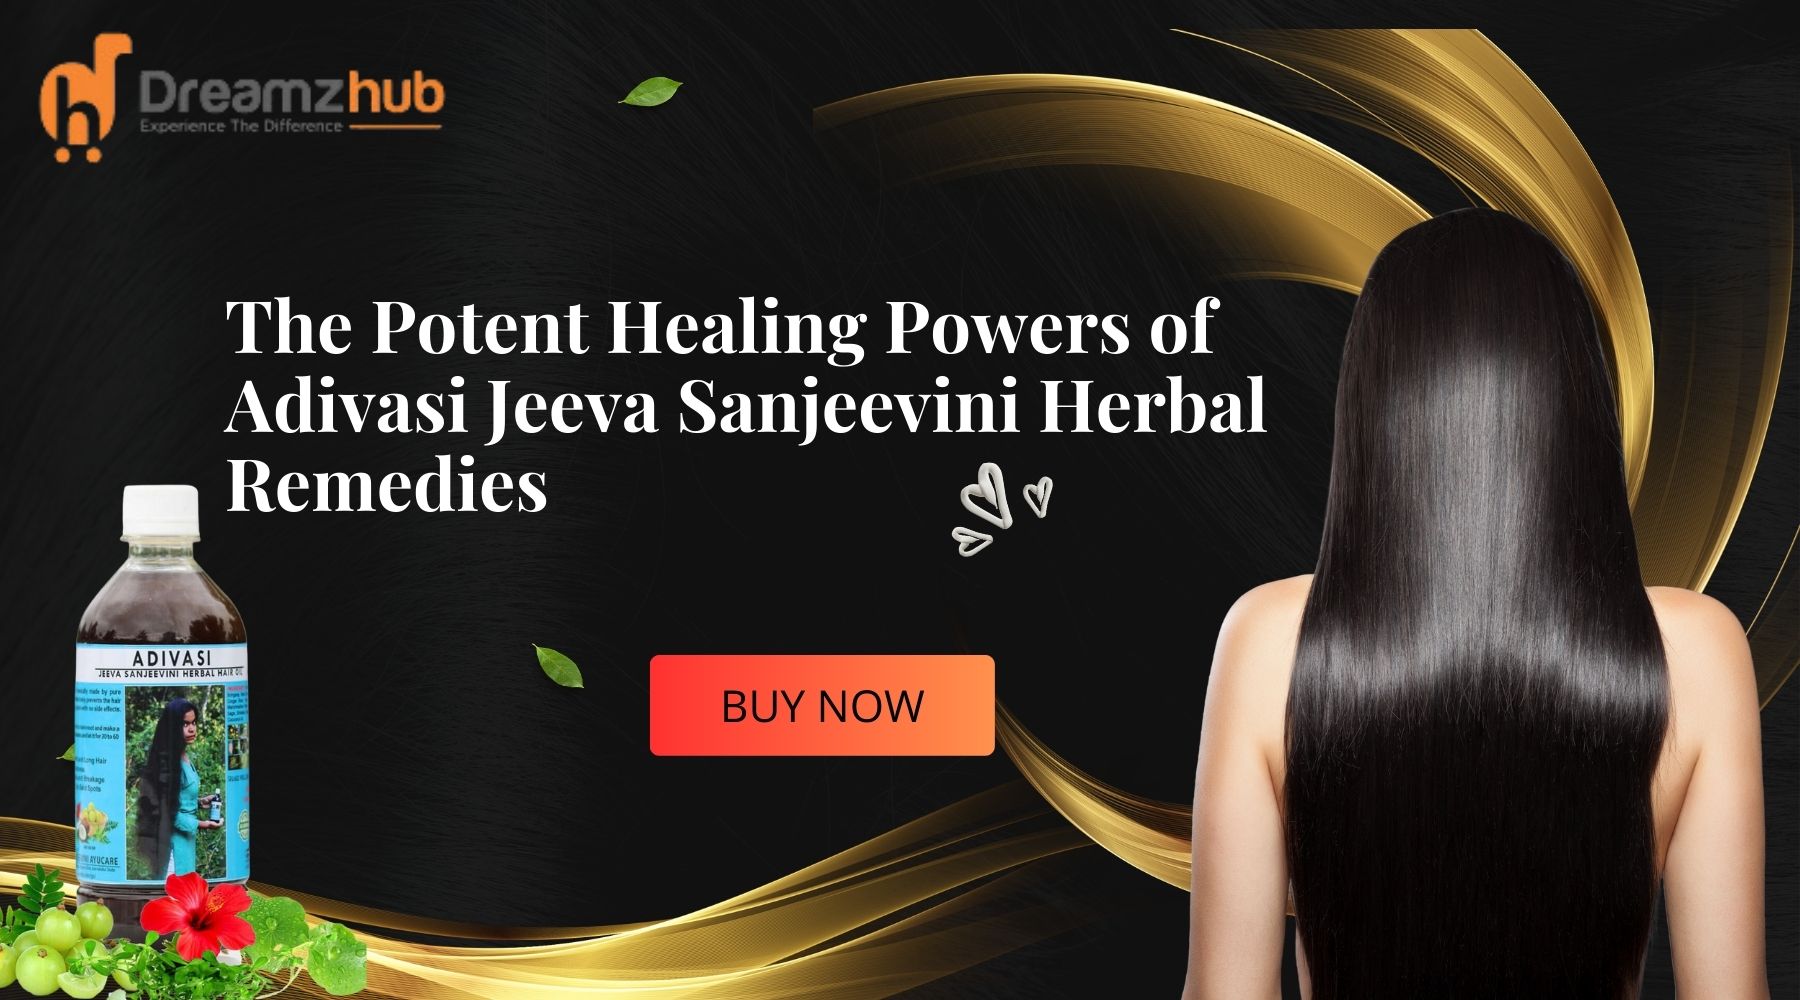 Discover the Potent Healing Powers of Adivasi Jeeva Sanjeevini Herbal Remedies